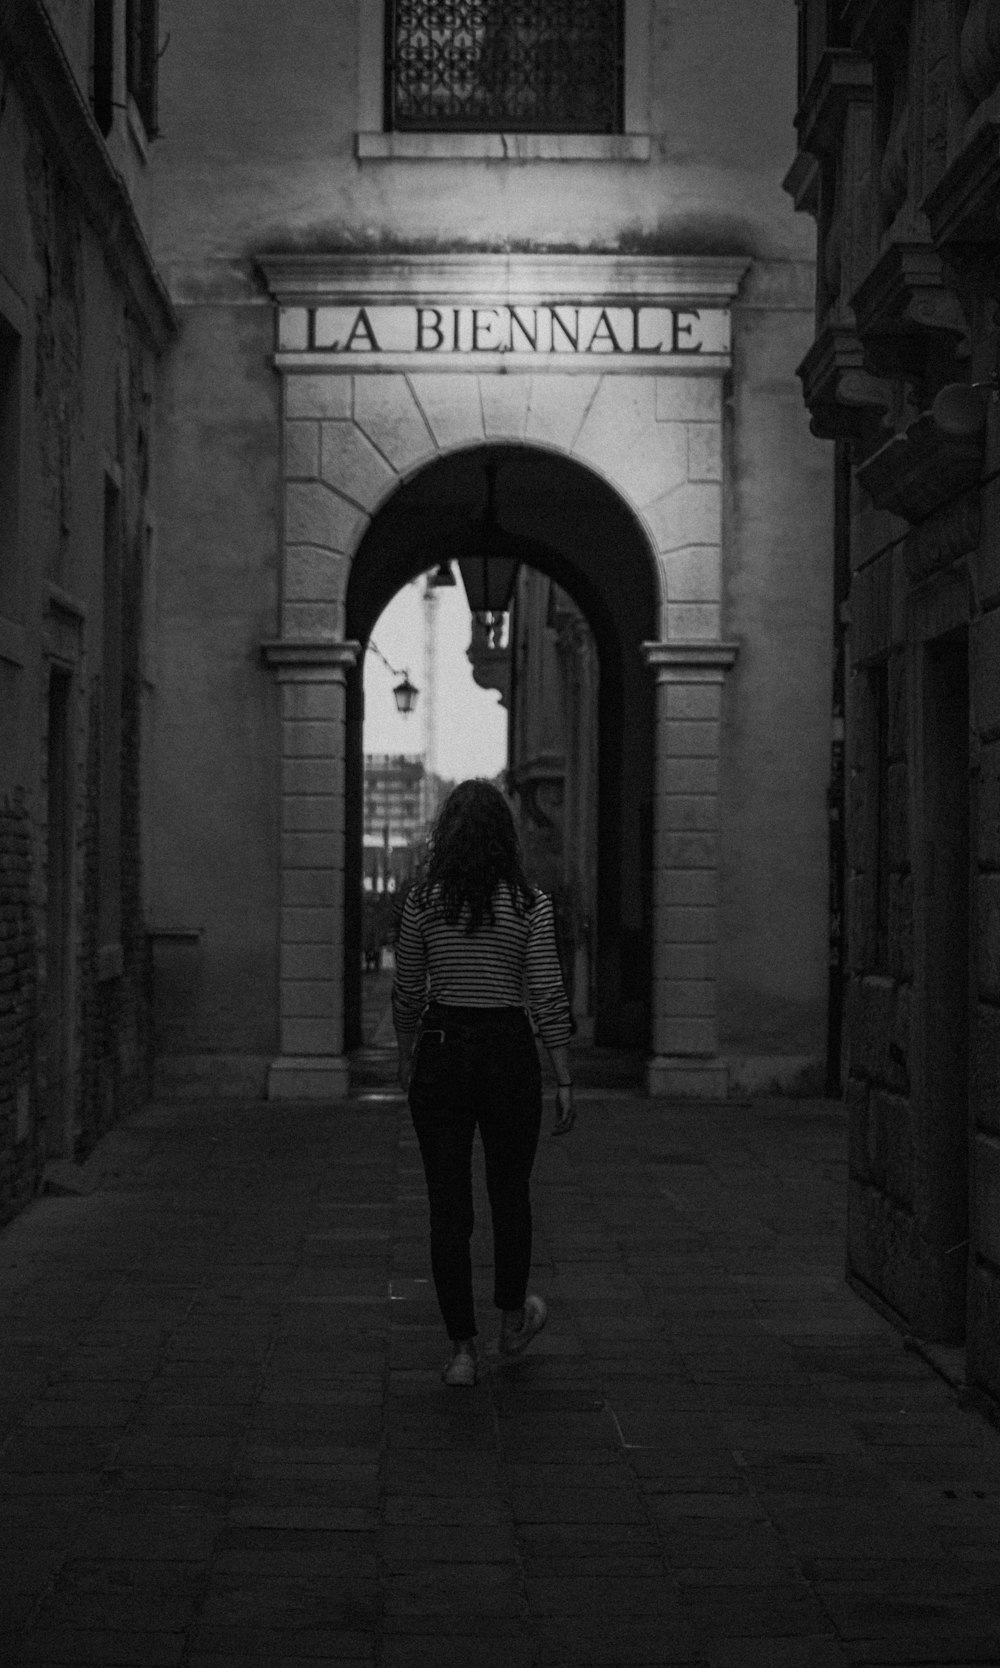 a woman walking down a dark alley way